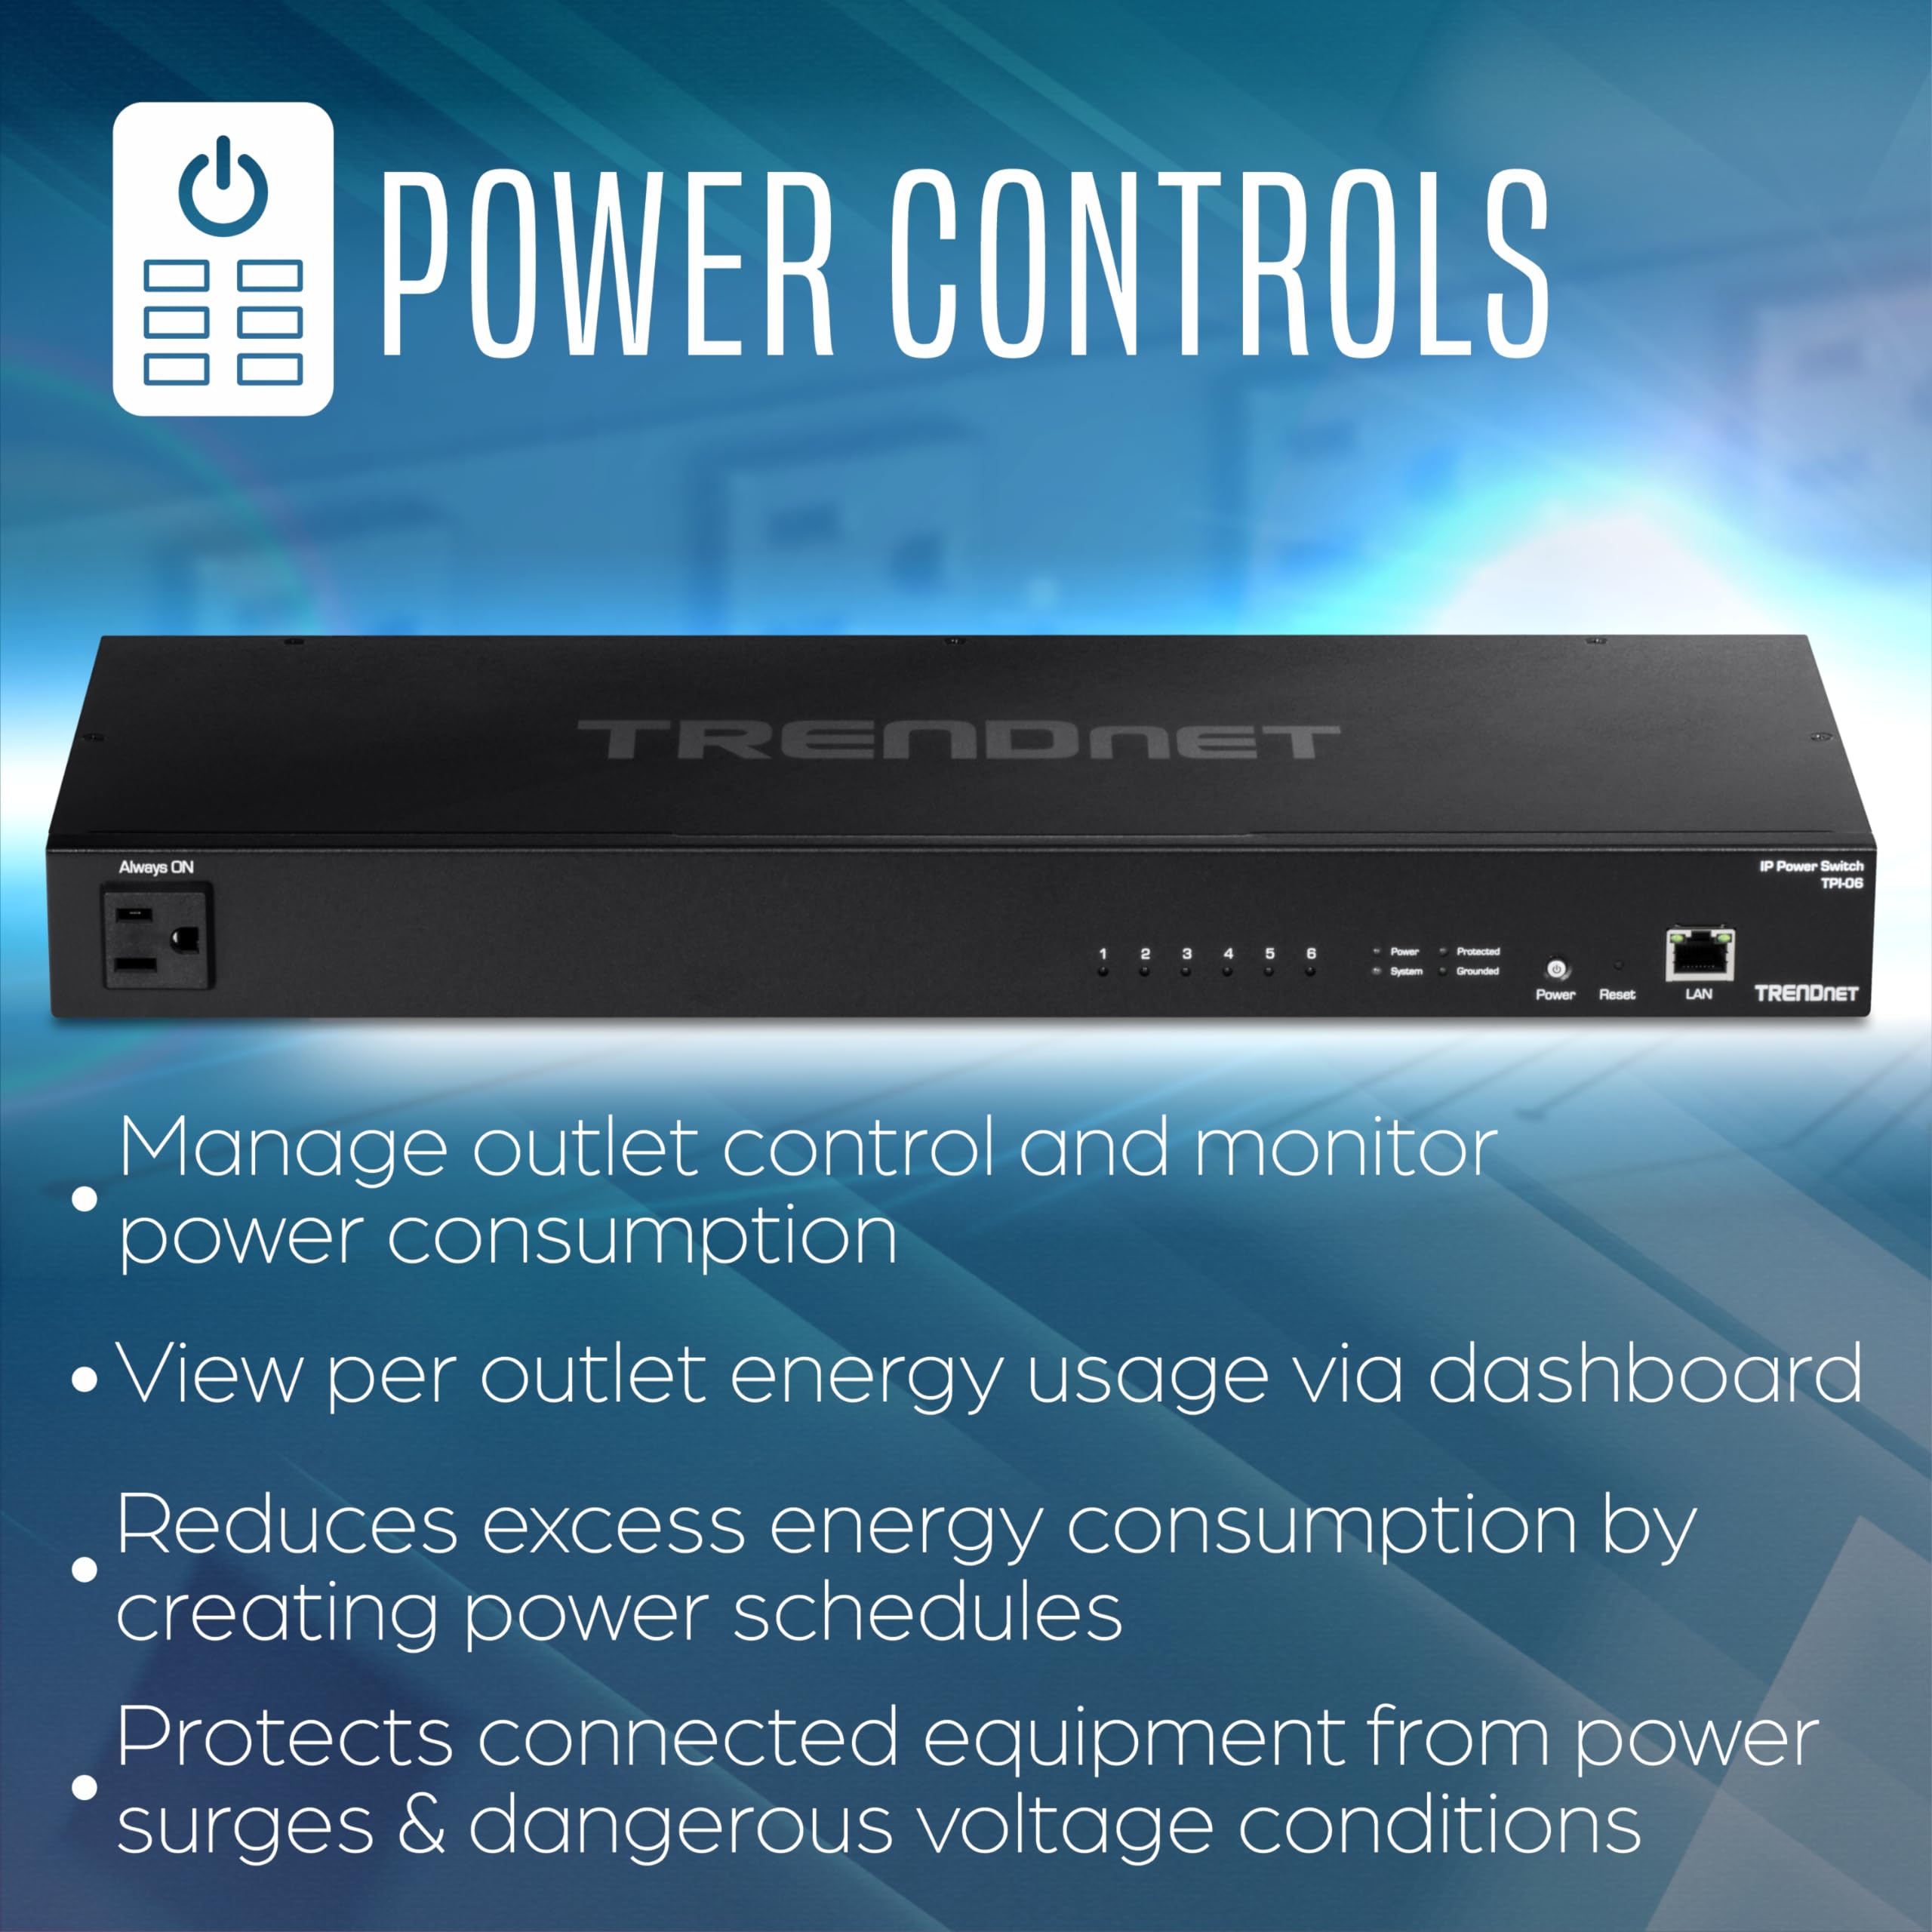 TRENDnet 6-Outlet Managed PDU, Rackmount Power Distribution Unit, 1 x NEMA 5-15R Bypass Power Outlet, 1 x Gigabit RJ-45 Port, Overload Protection, Surge Protection 2160J, Black, TPI-06